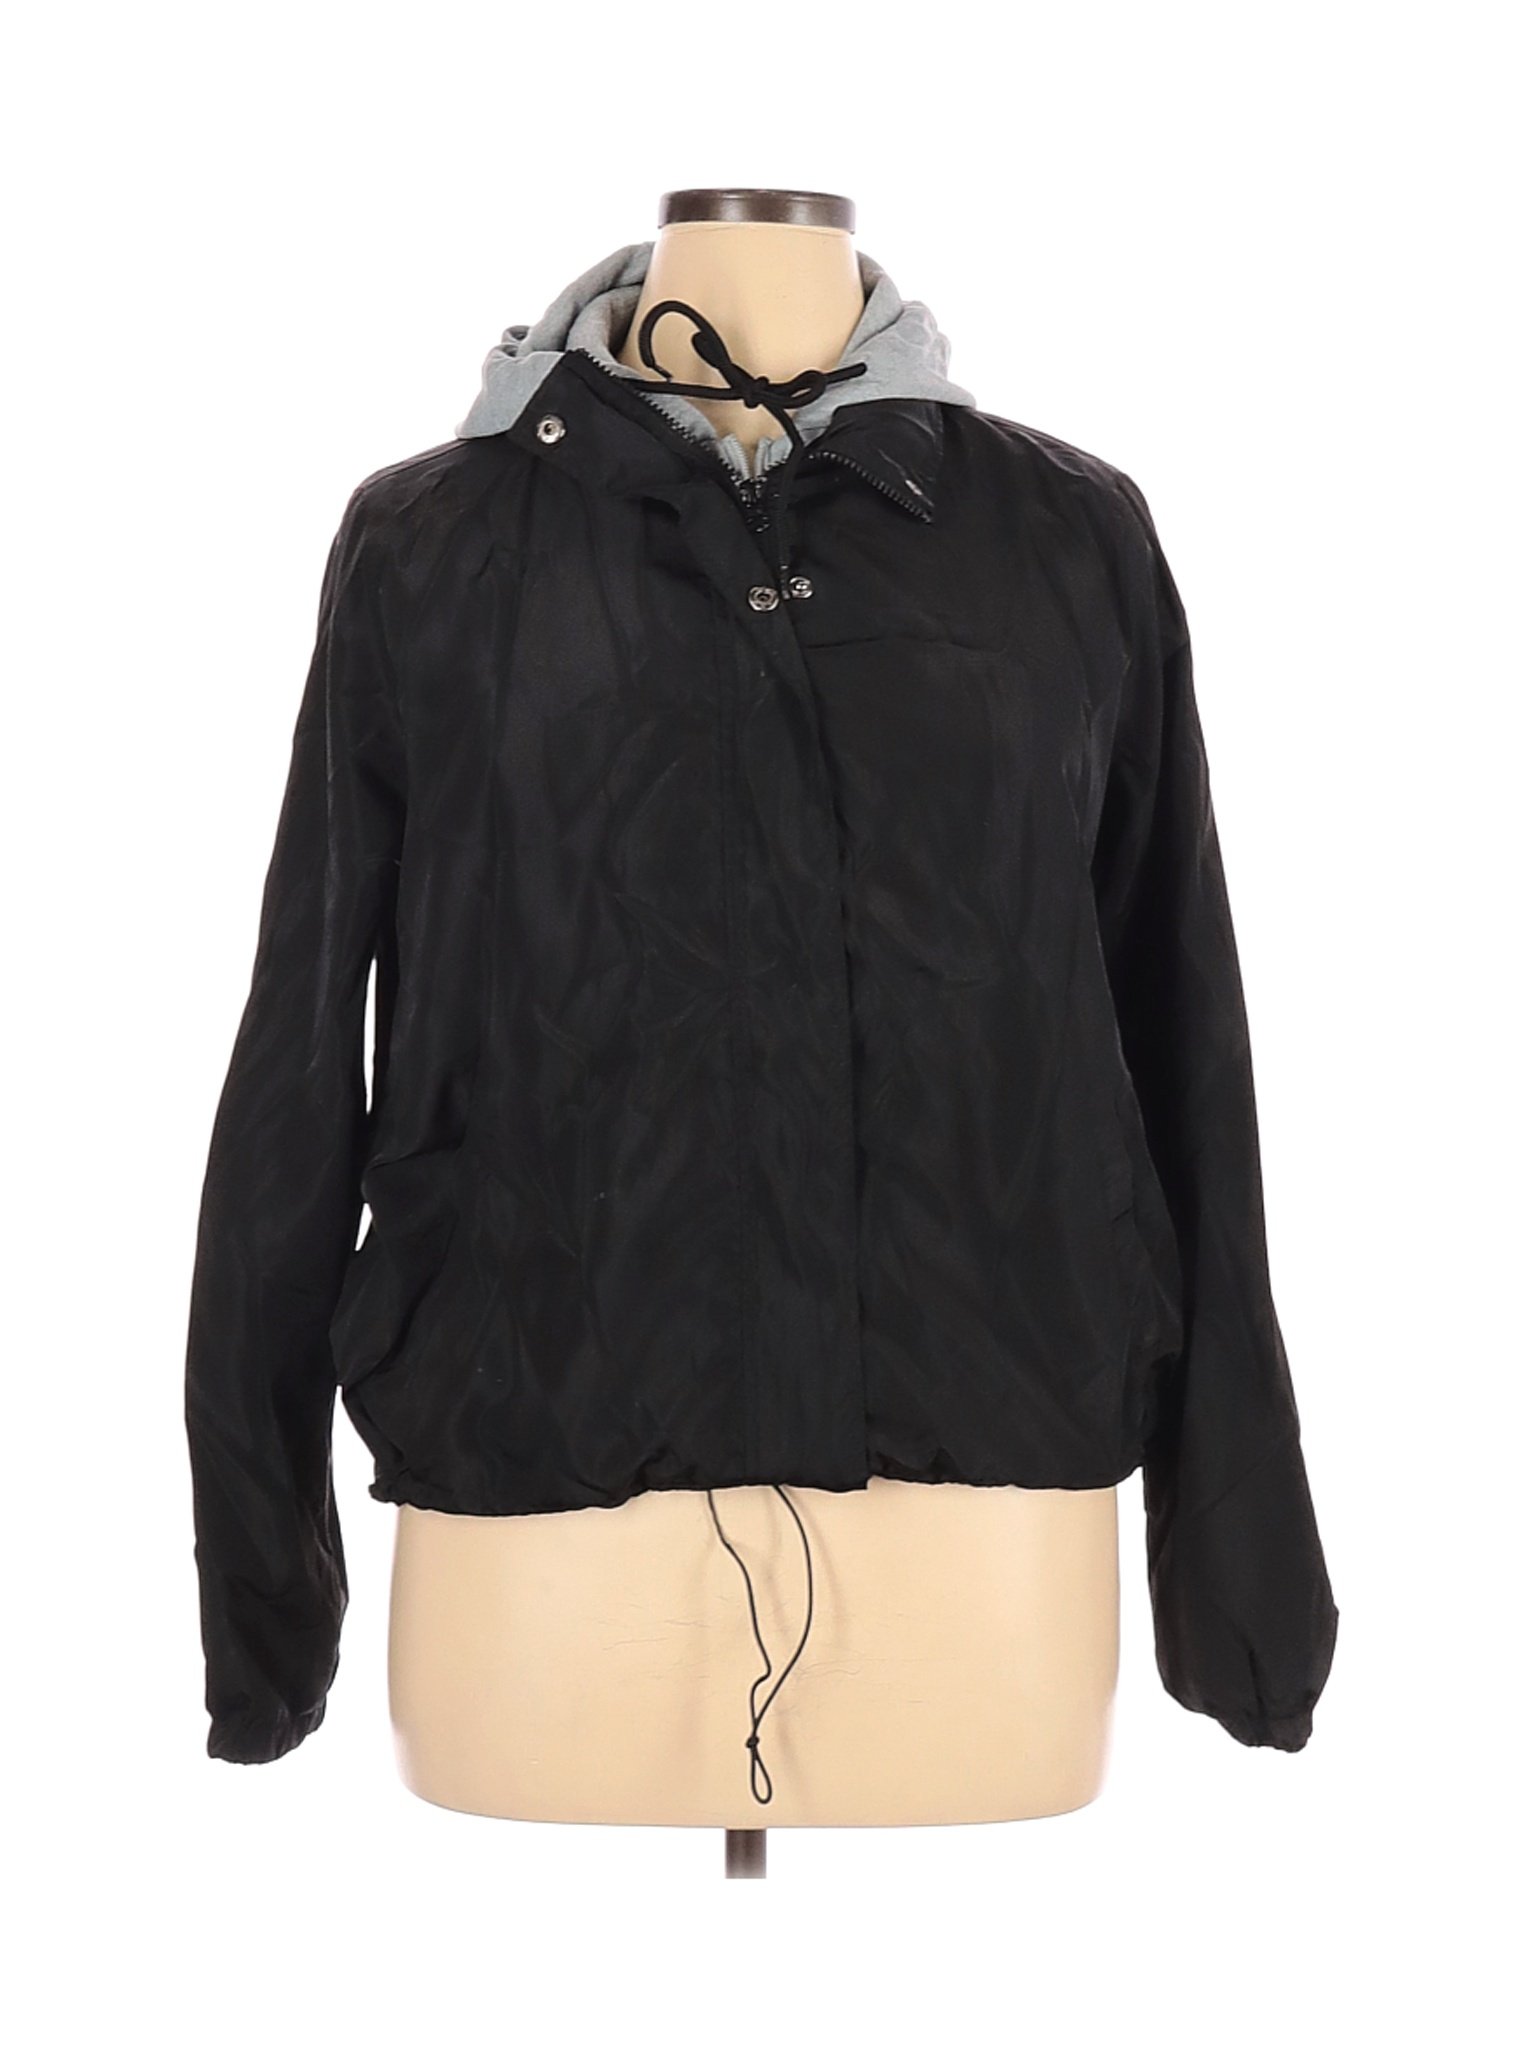 No Boundaries Women Black Jacket XL | eBay